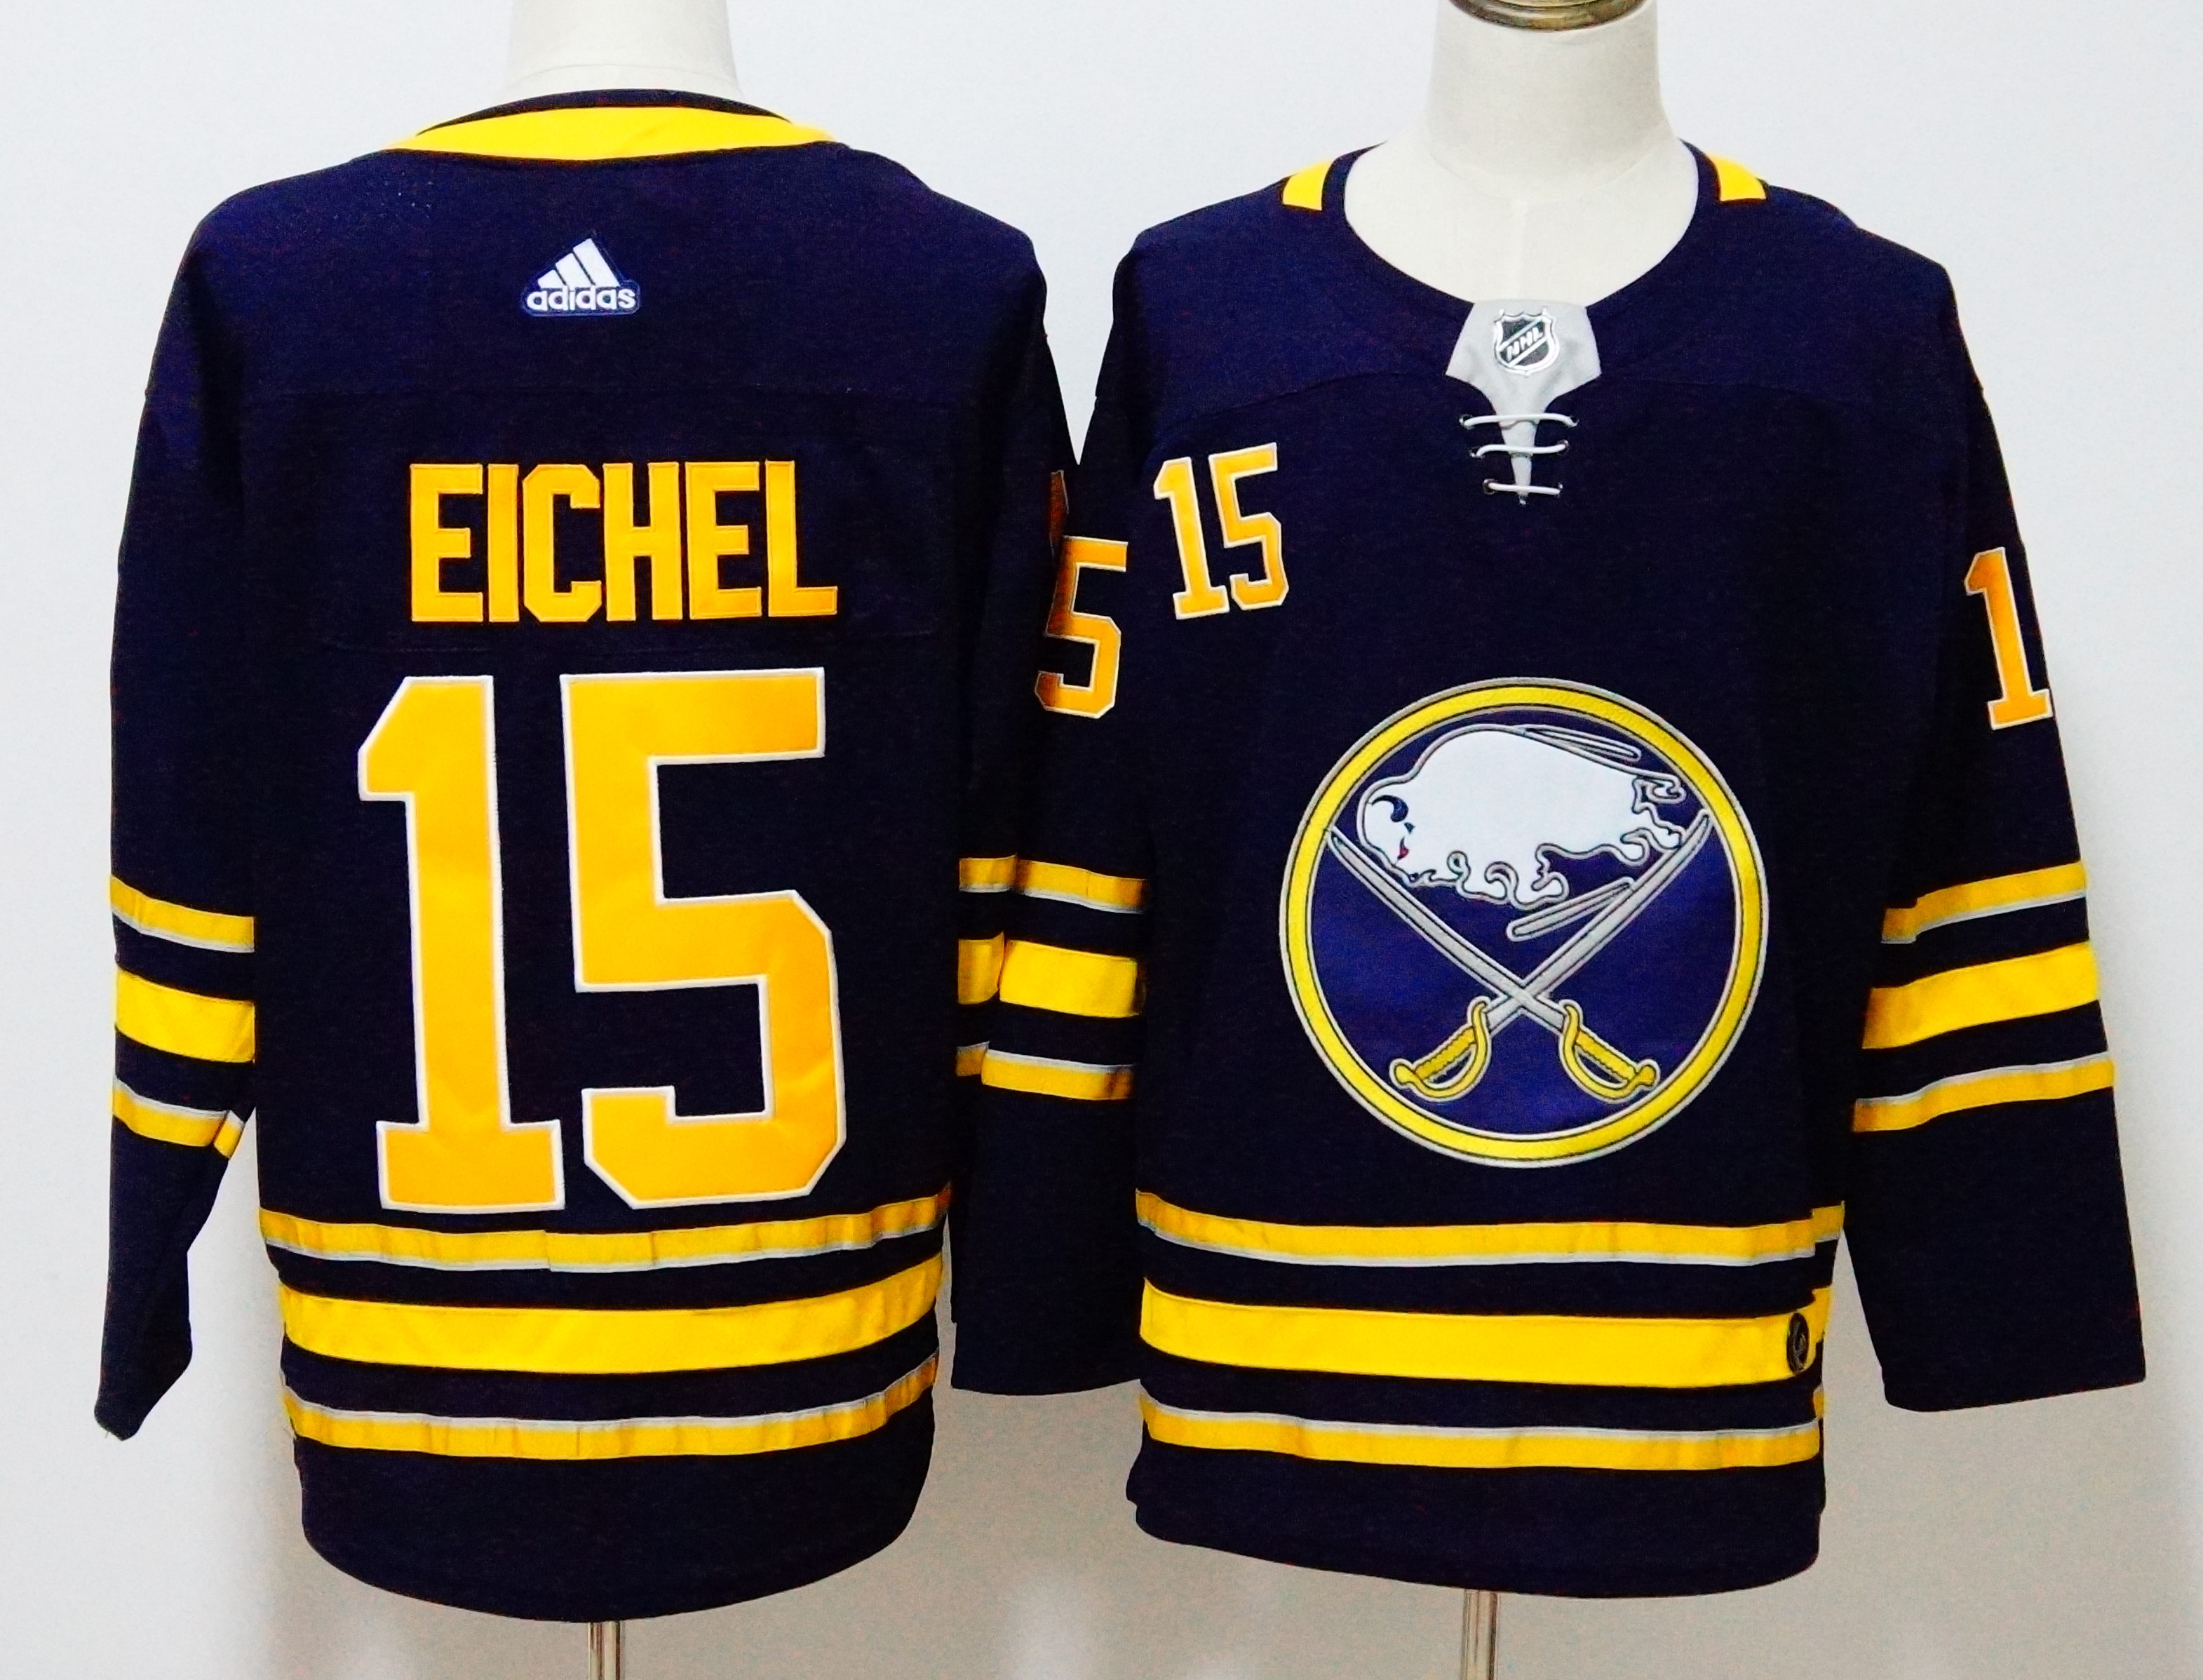 Men's Adidas Buffalo Sabres #15 Jack Eichel Navy Stitched NHL Jersey